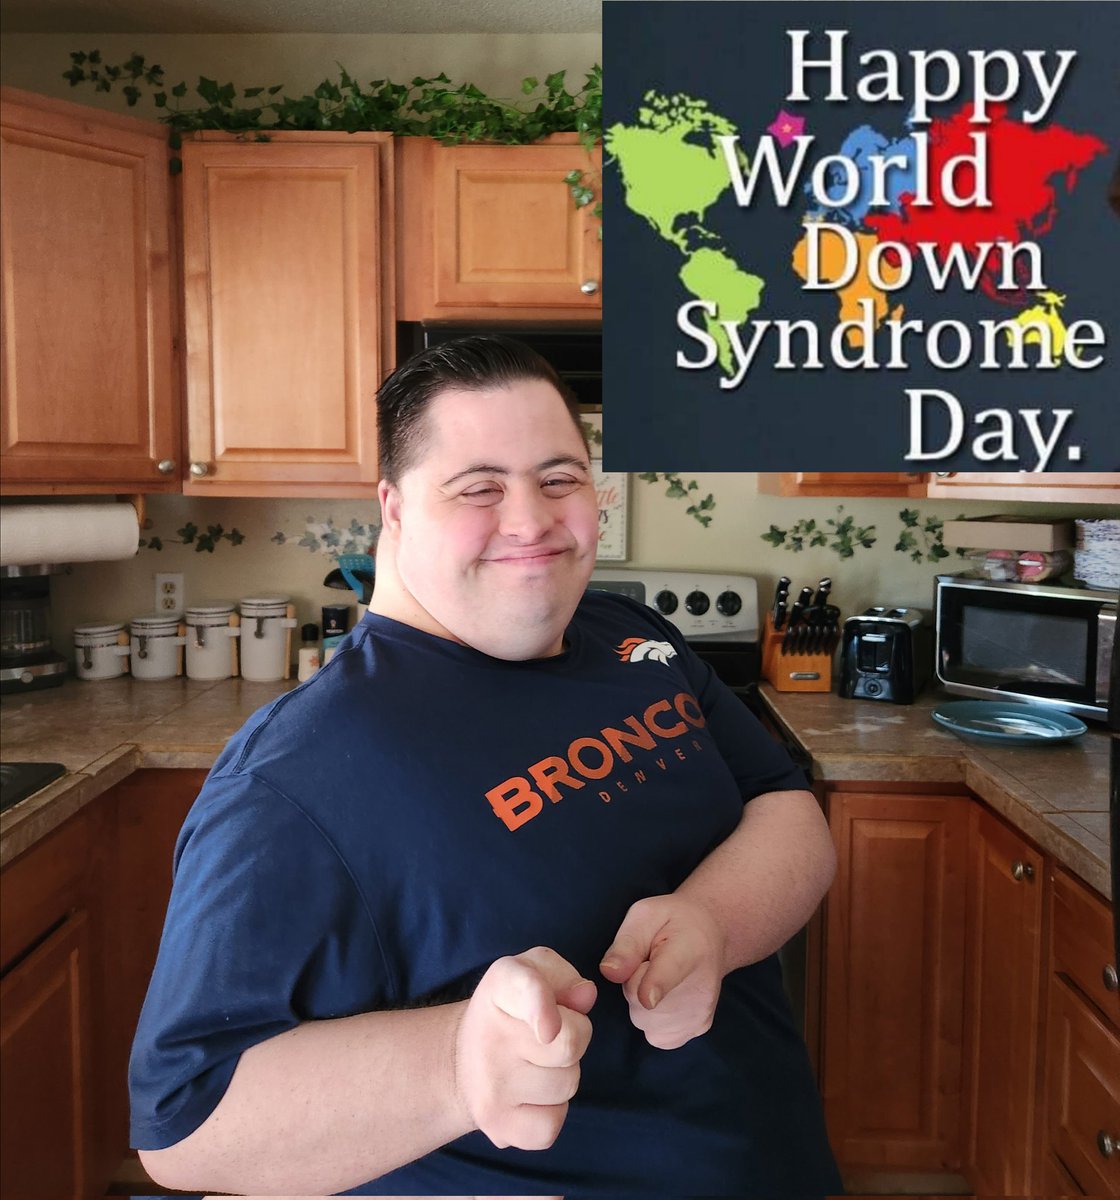 Happy World Down Syndrome Day 3/21/24.
💙💛🤟
#ProudMom
#TeamShawn
#Trisomy21
#DareToBeDifferent
#DownSyndrome 
#WorldDownSyndromeDay 
#UnconditionalLove